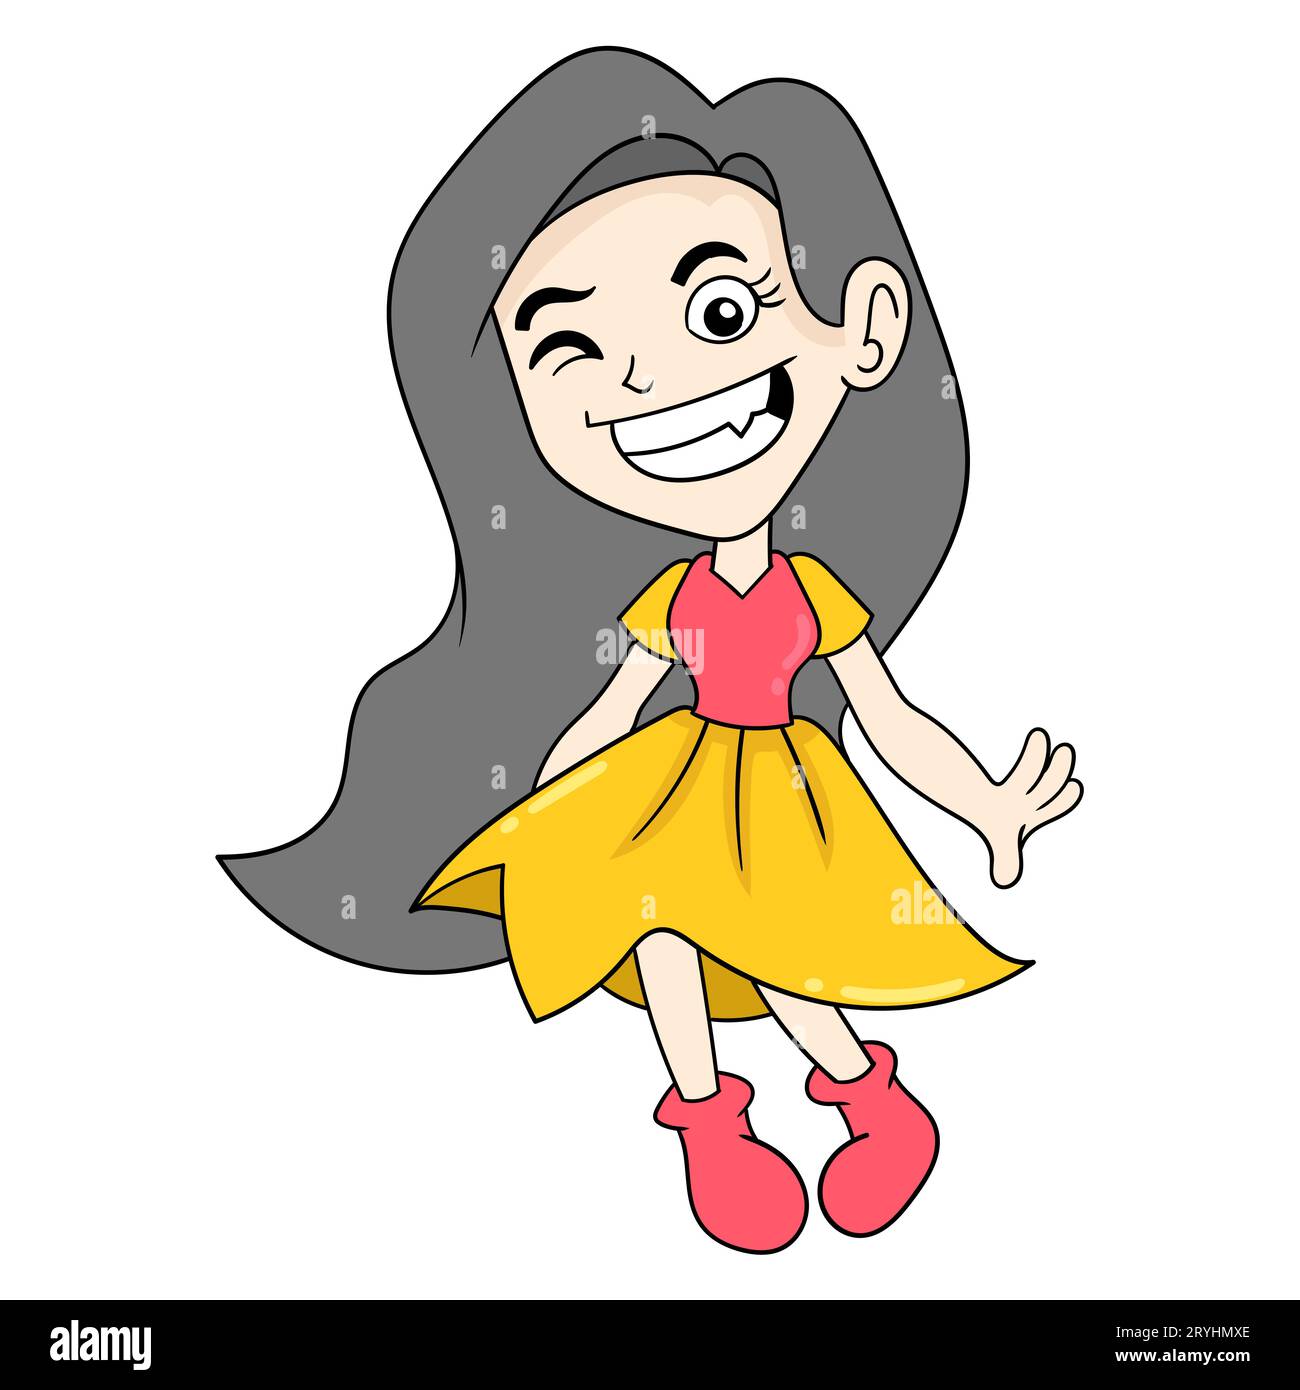 https://c8.alamy.com/comp/2RYHMXE/beautiful-girl-long-hair-wearing-dress-smiling-happily-vector-illustration-art-doodle-icon-image-kawaii-2RYHMXE.jpg